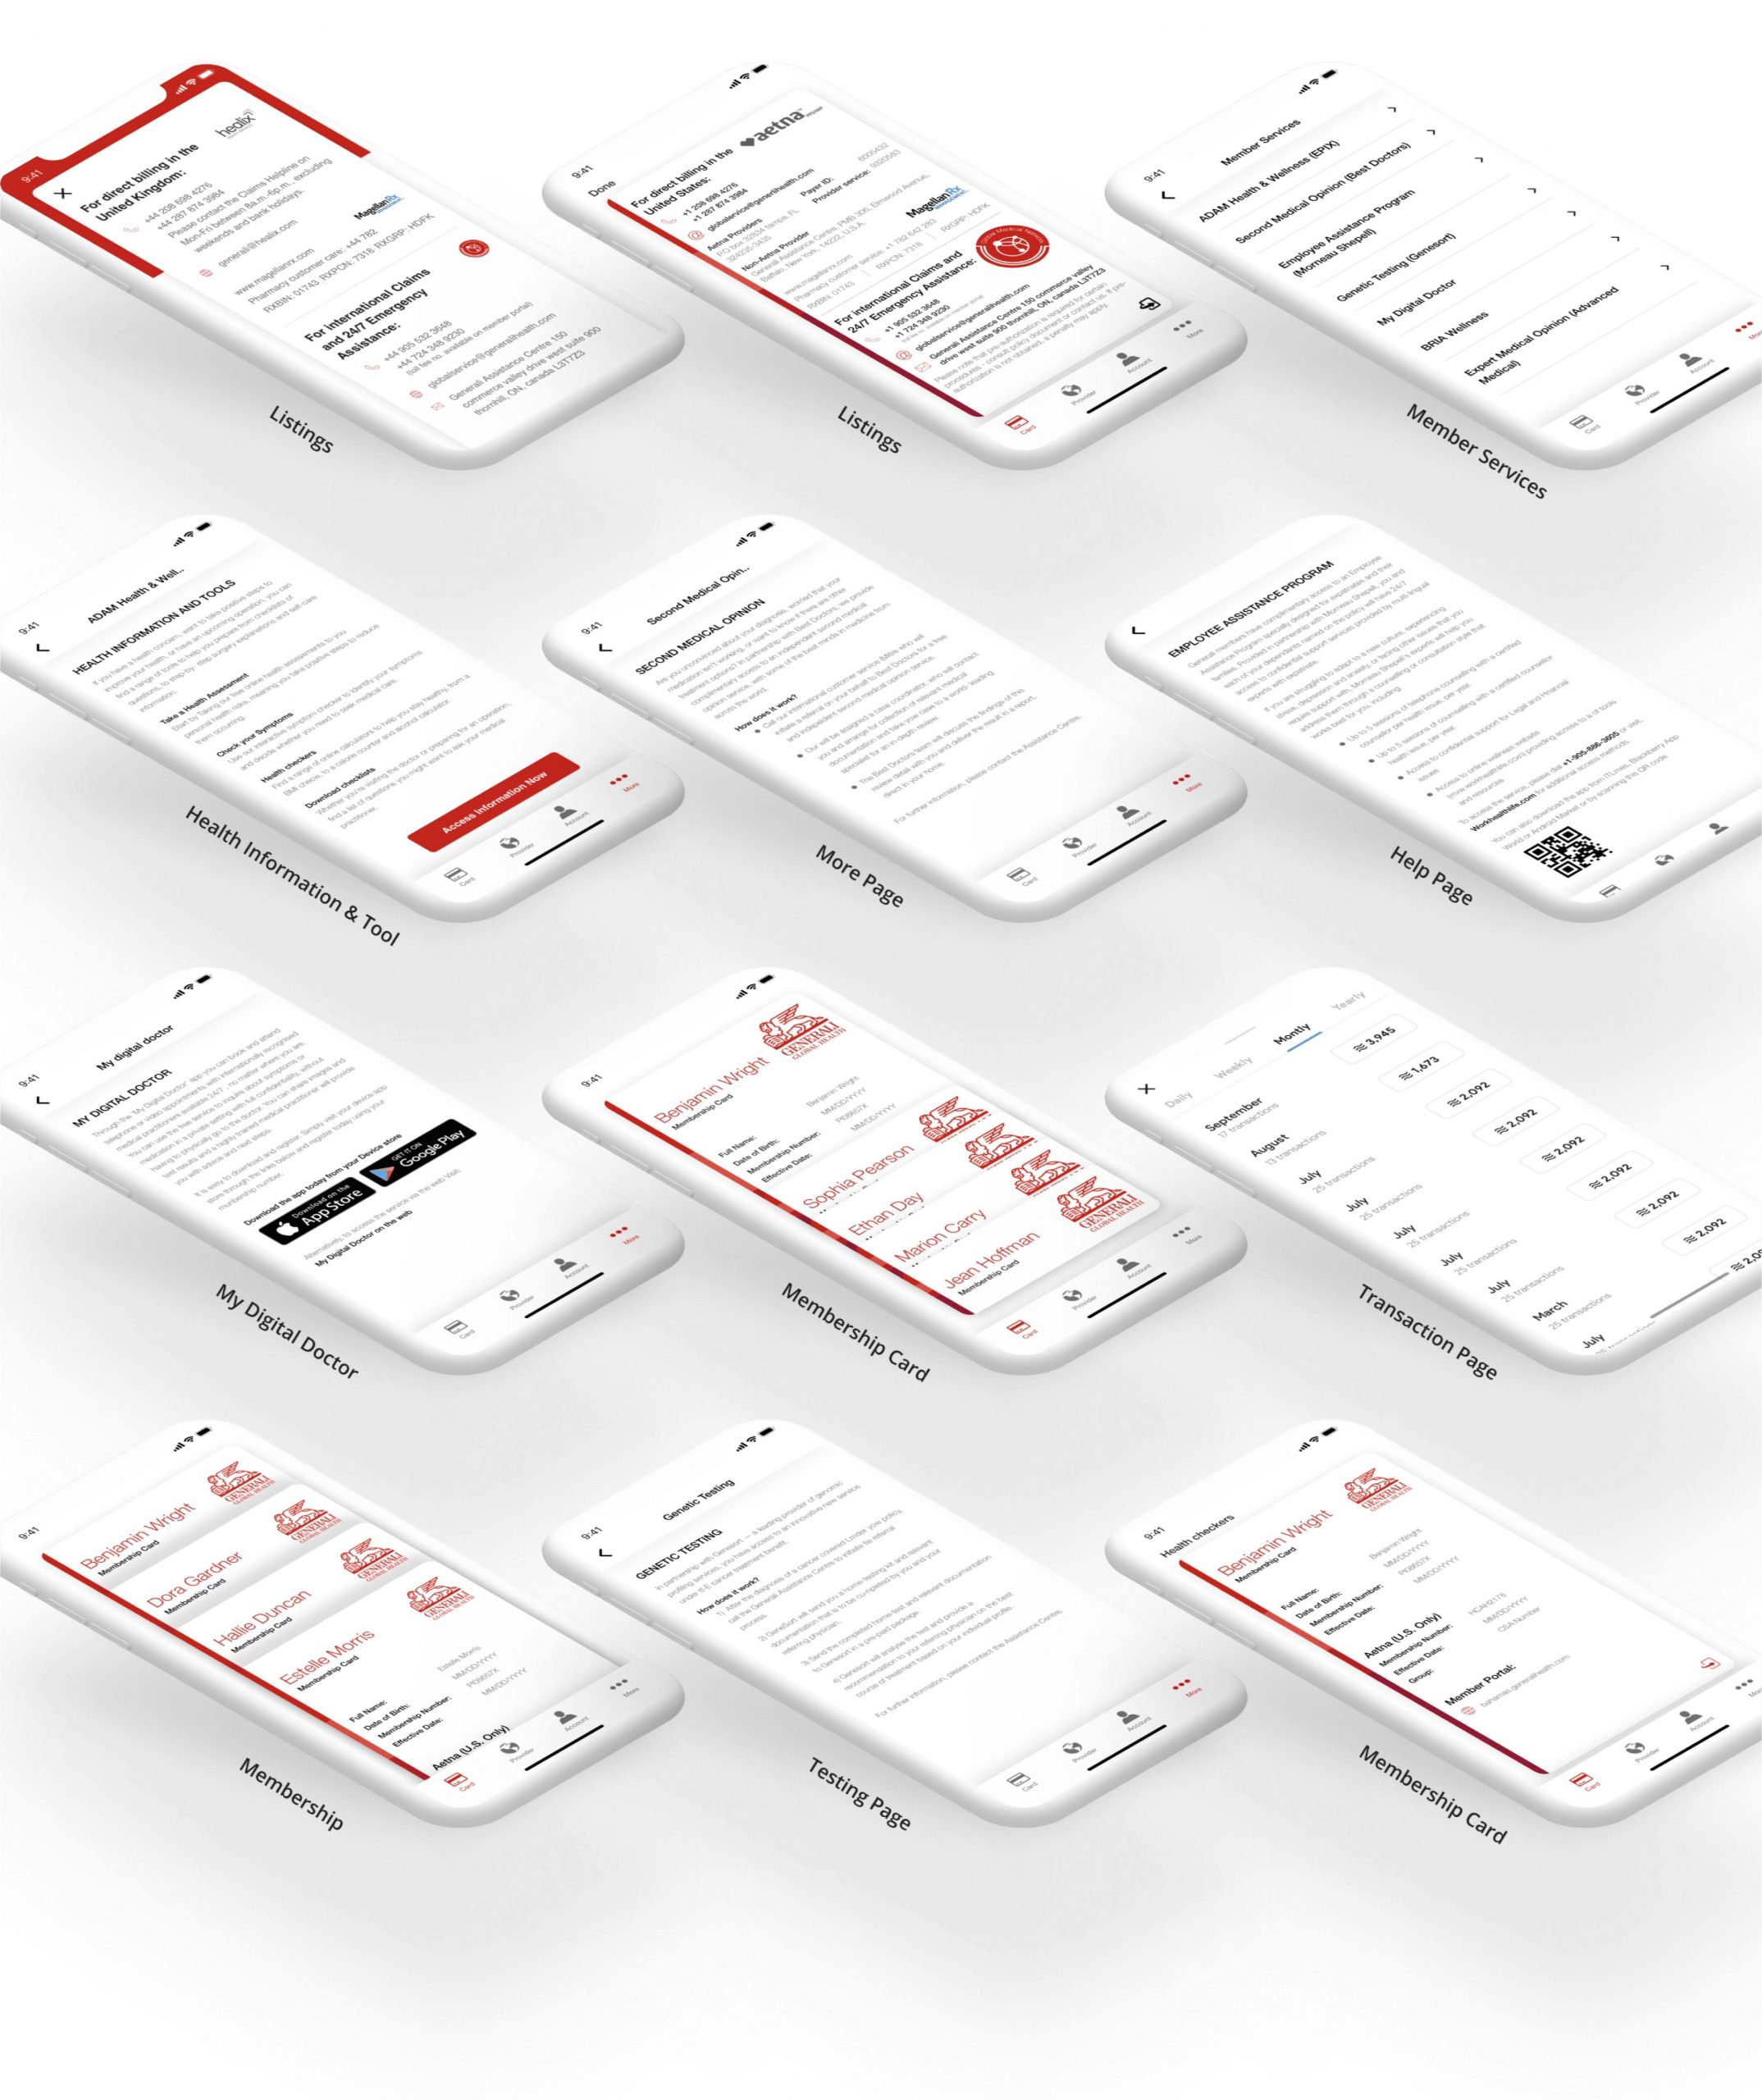 Other Screens of Generali Insurance App